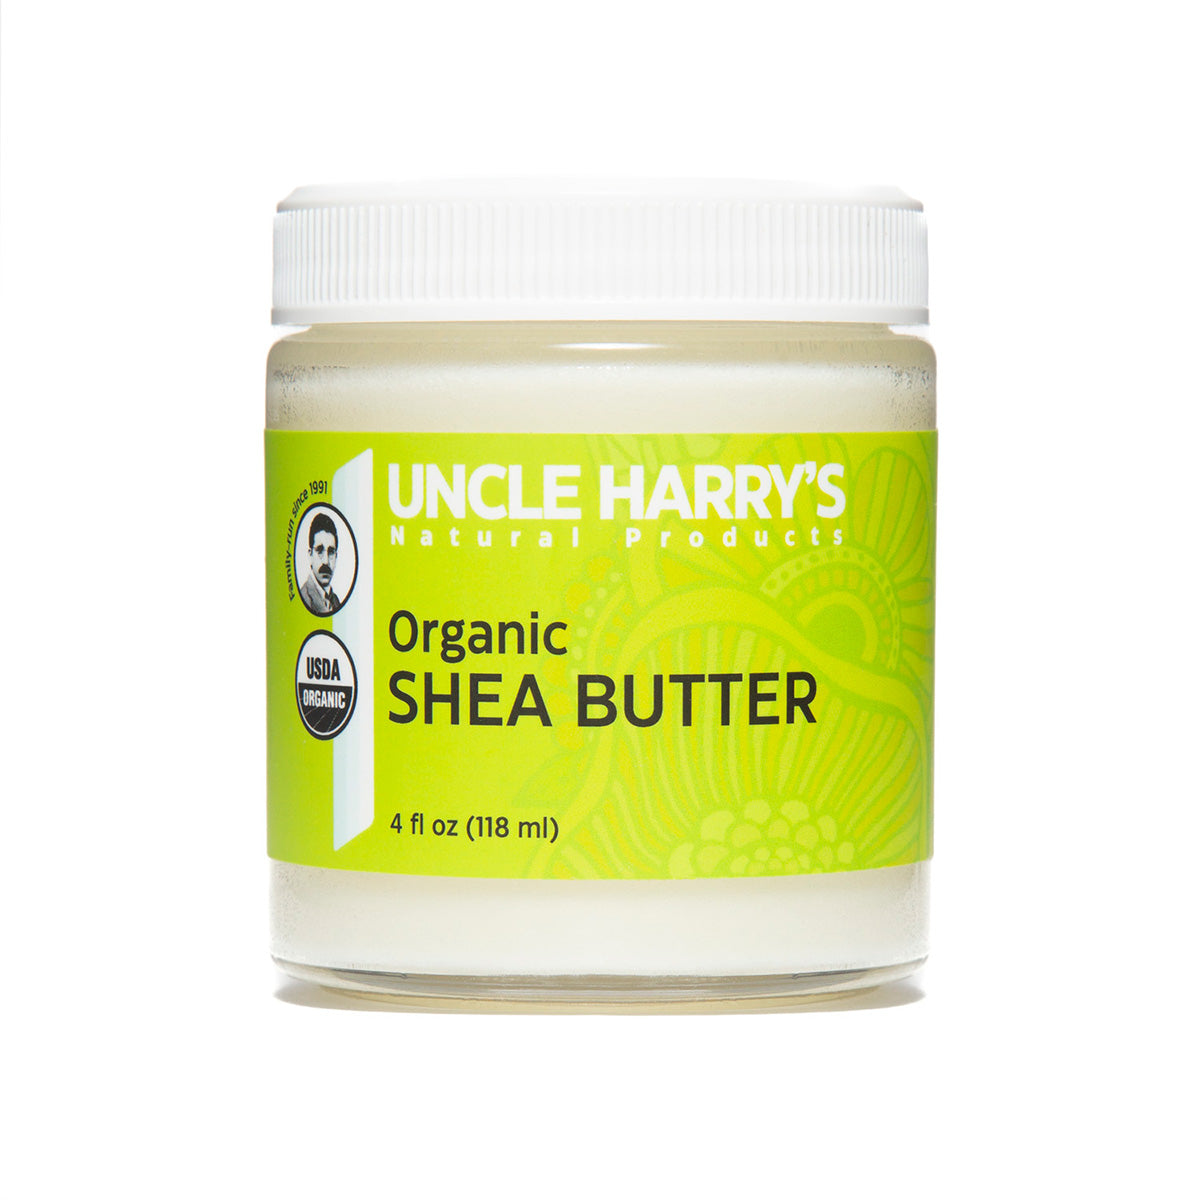 Organic Shea Butter 4 fl oz glass jar